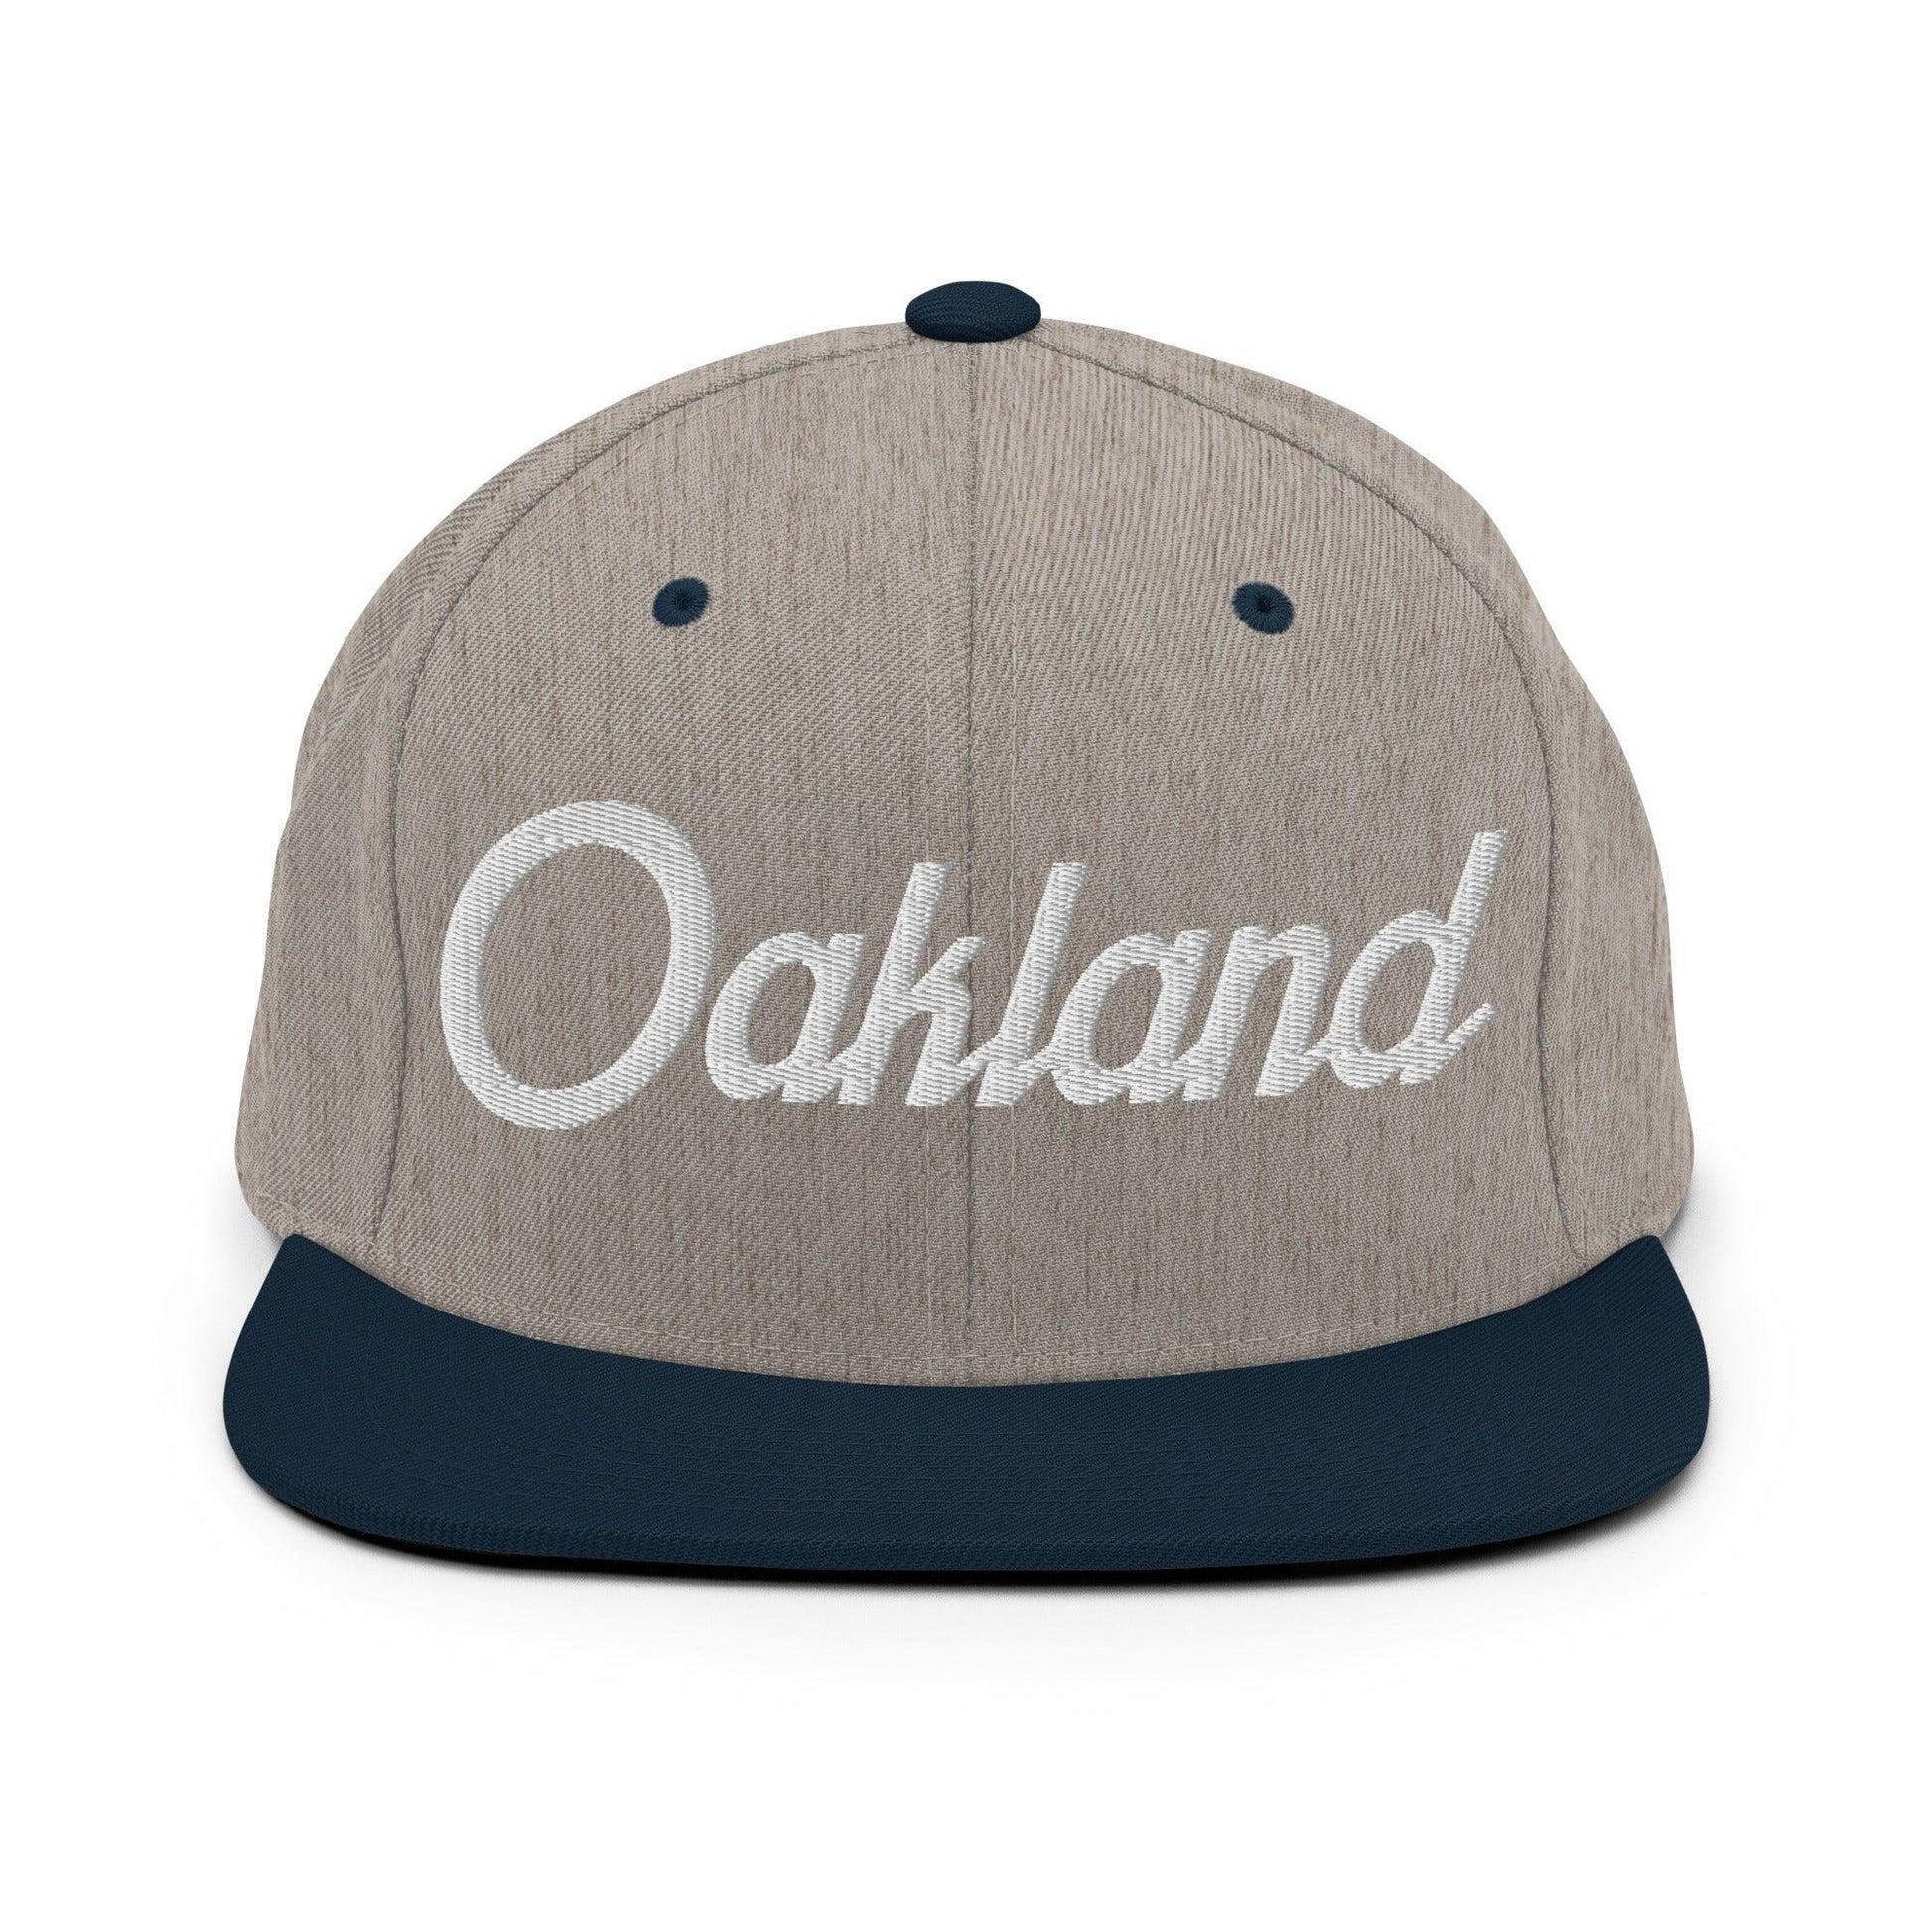 Oakland Script Snapback Hat Heather Grey/ Navy